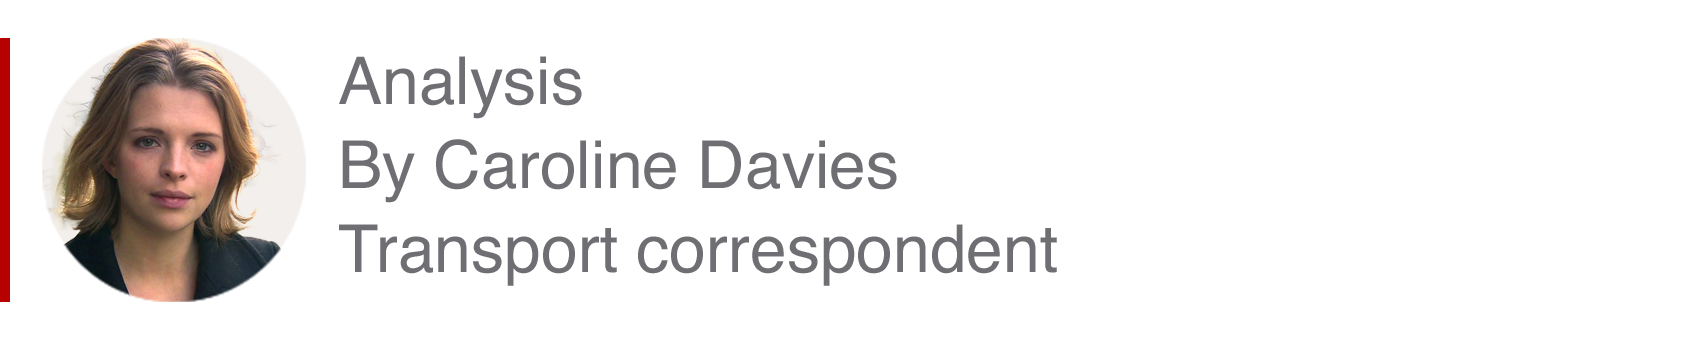 Analysis box by Caroline Davies, transport correspondent